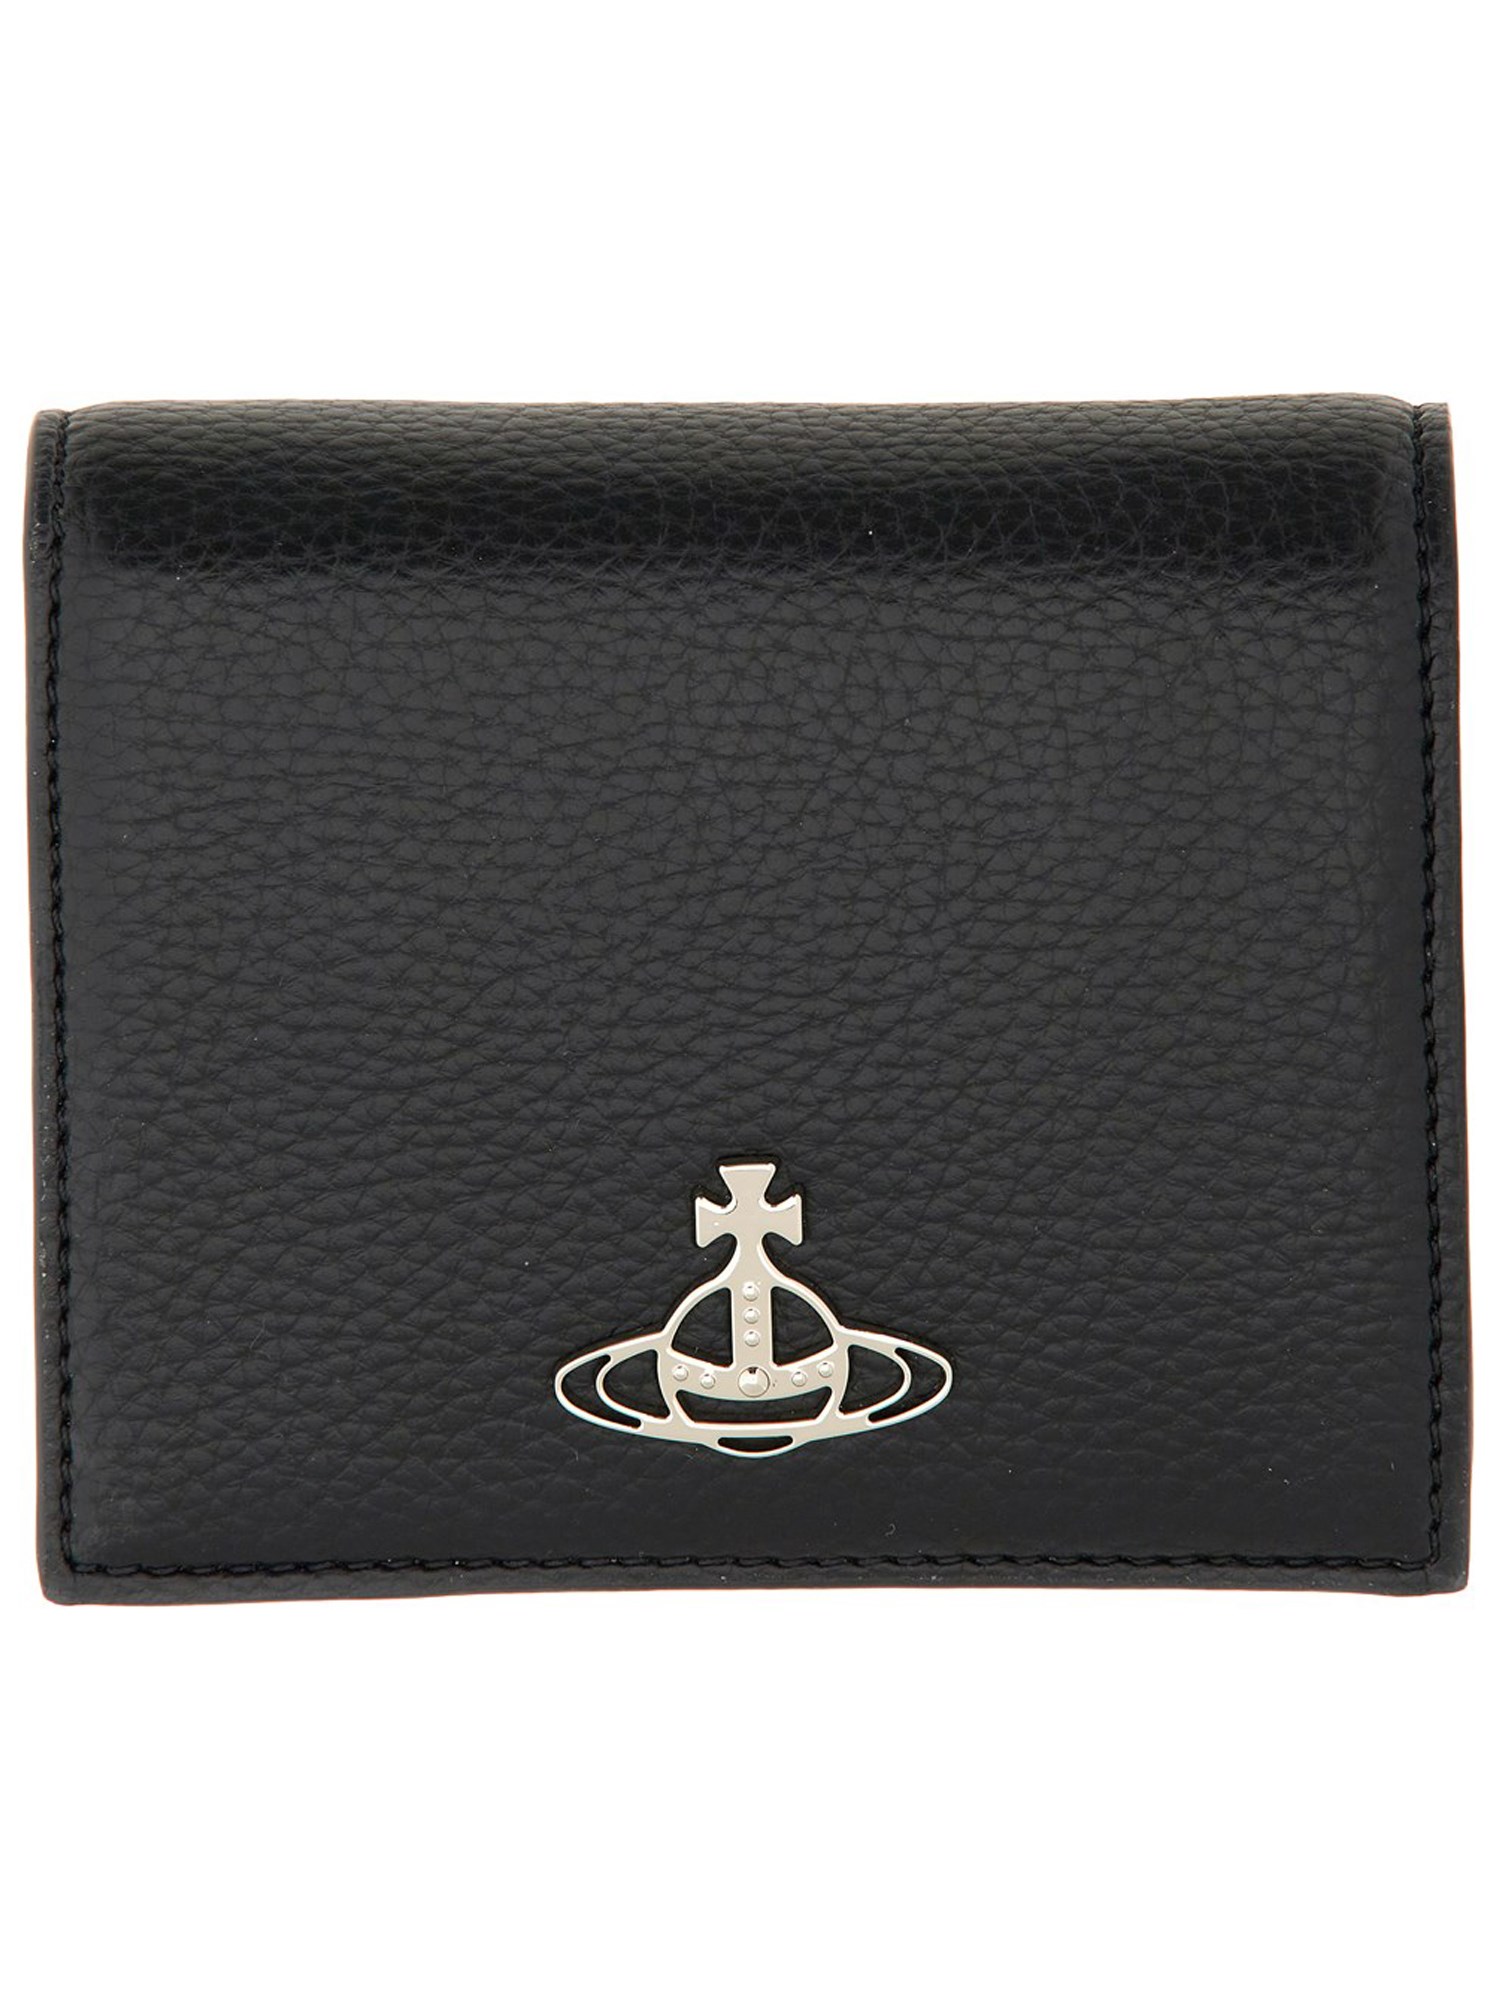 vivienne westwood wallet with logo